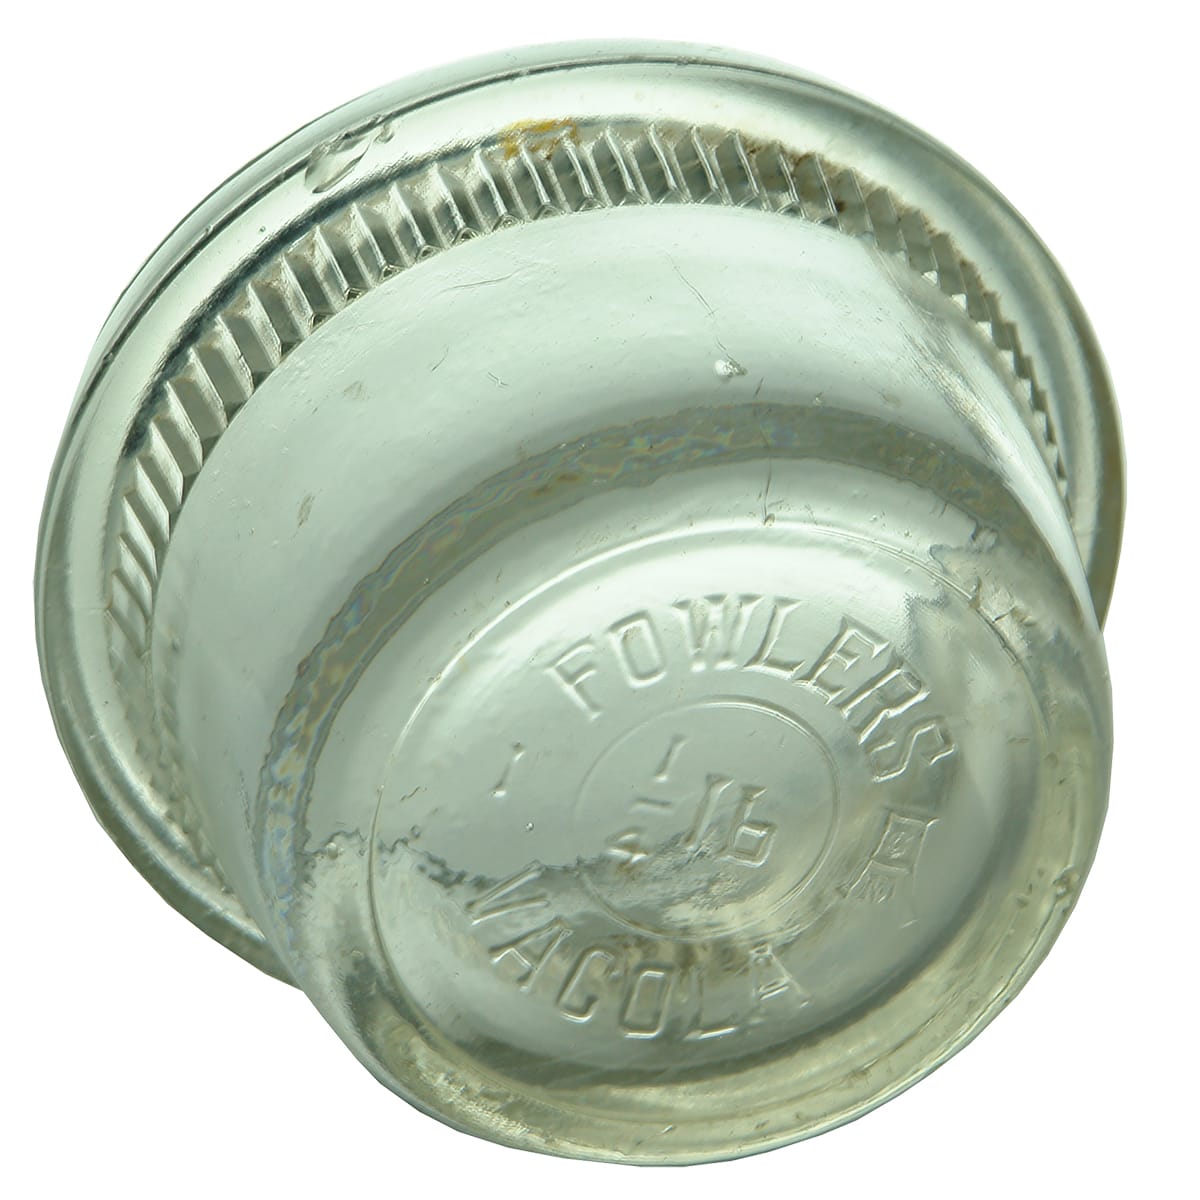 Fowlers Vacola 1/4 Lb Meat Paste type jar.